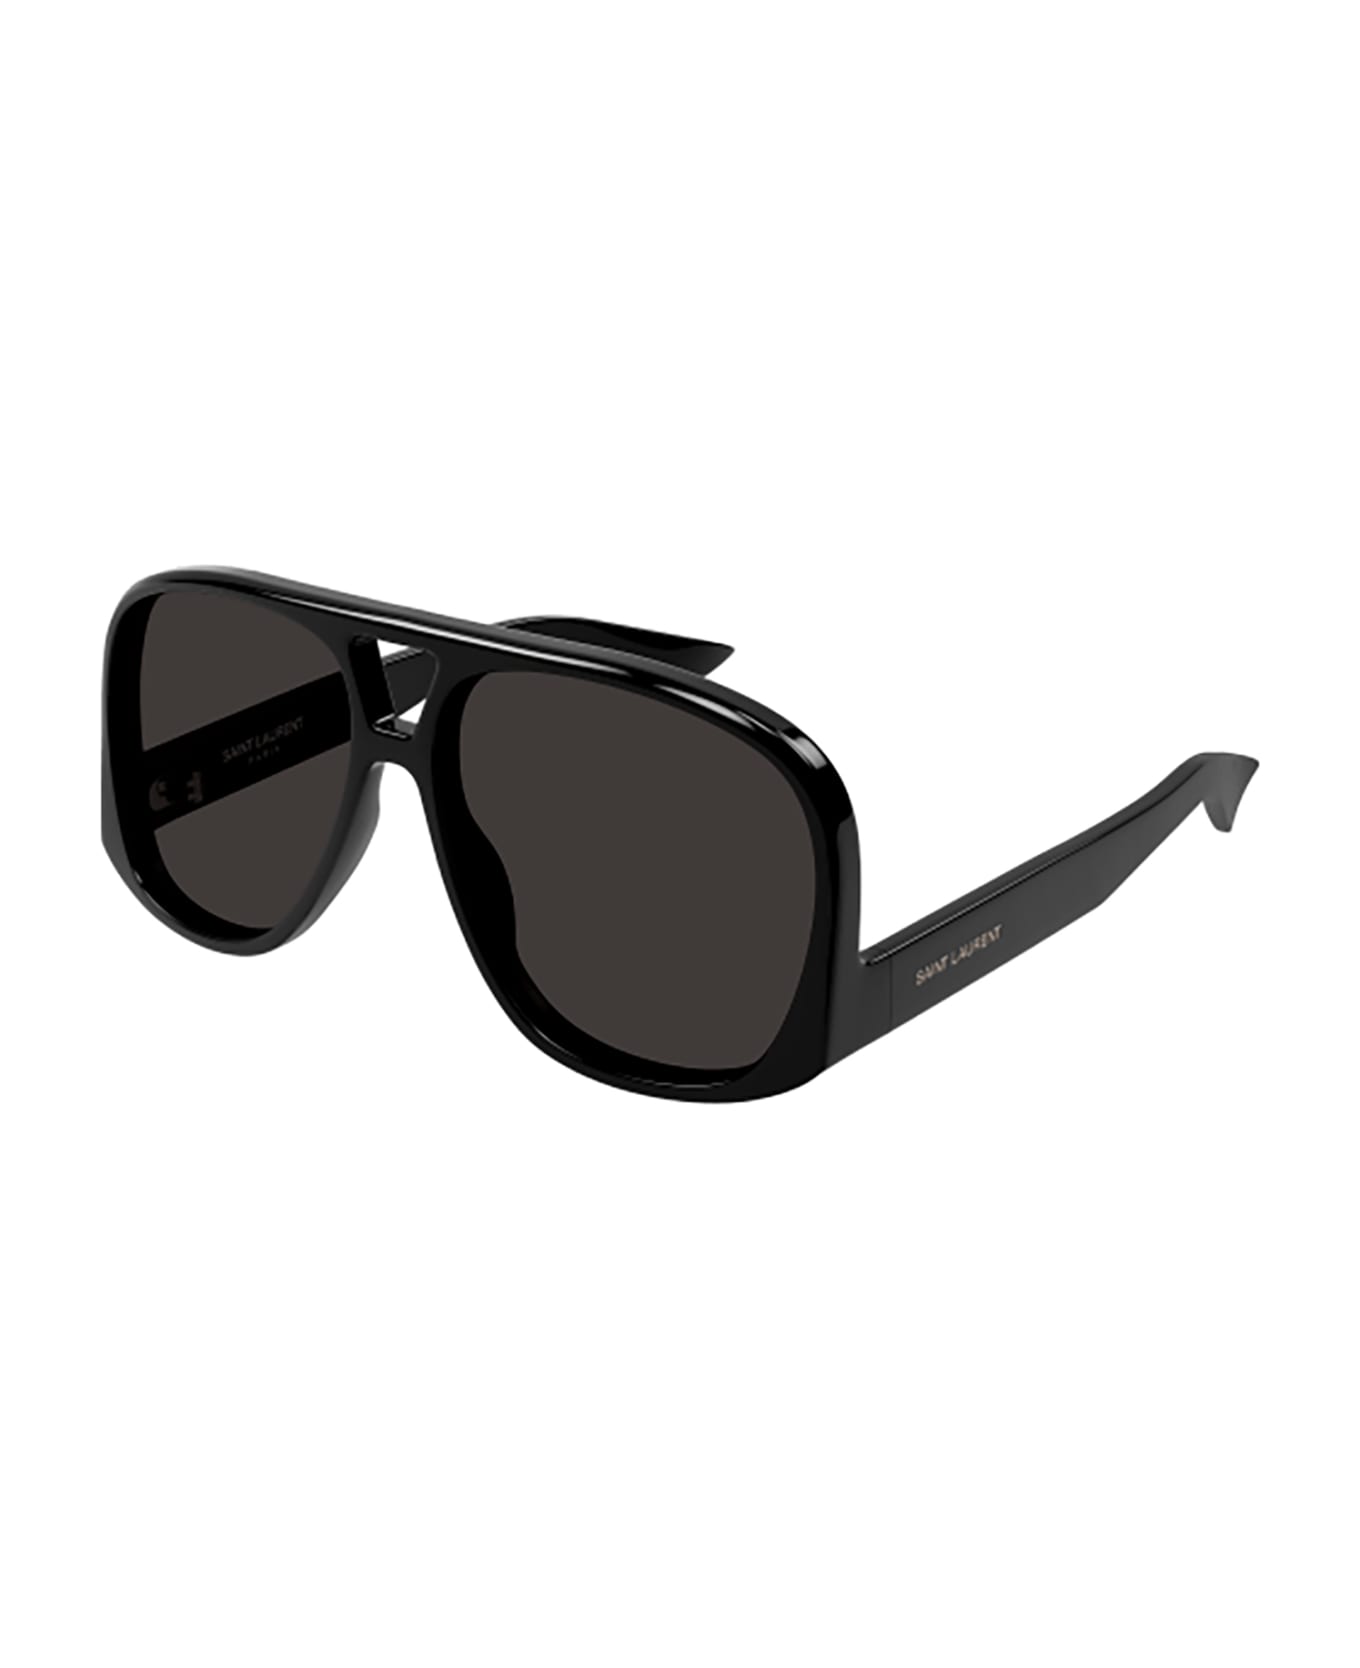 Saint Laurent Eyewear Sl 652 Solace Sunglasses - 001 black black black